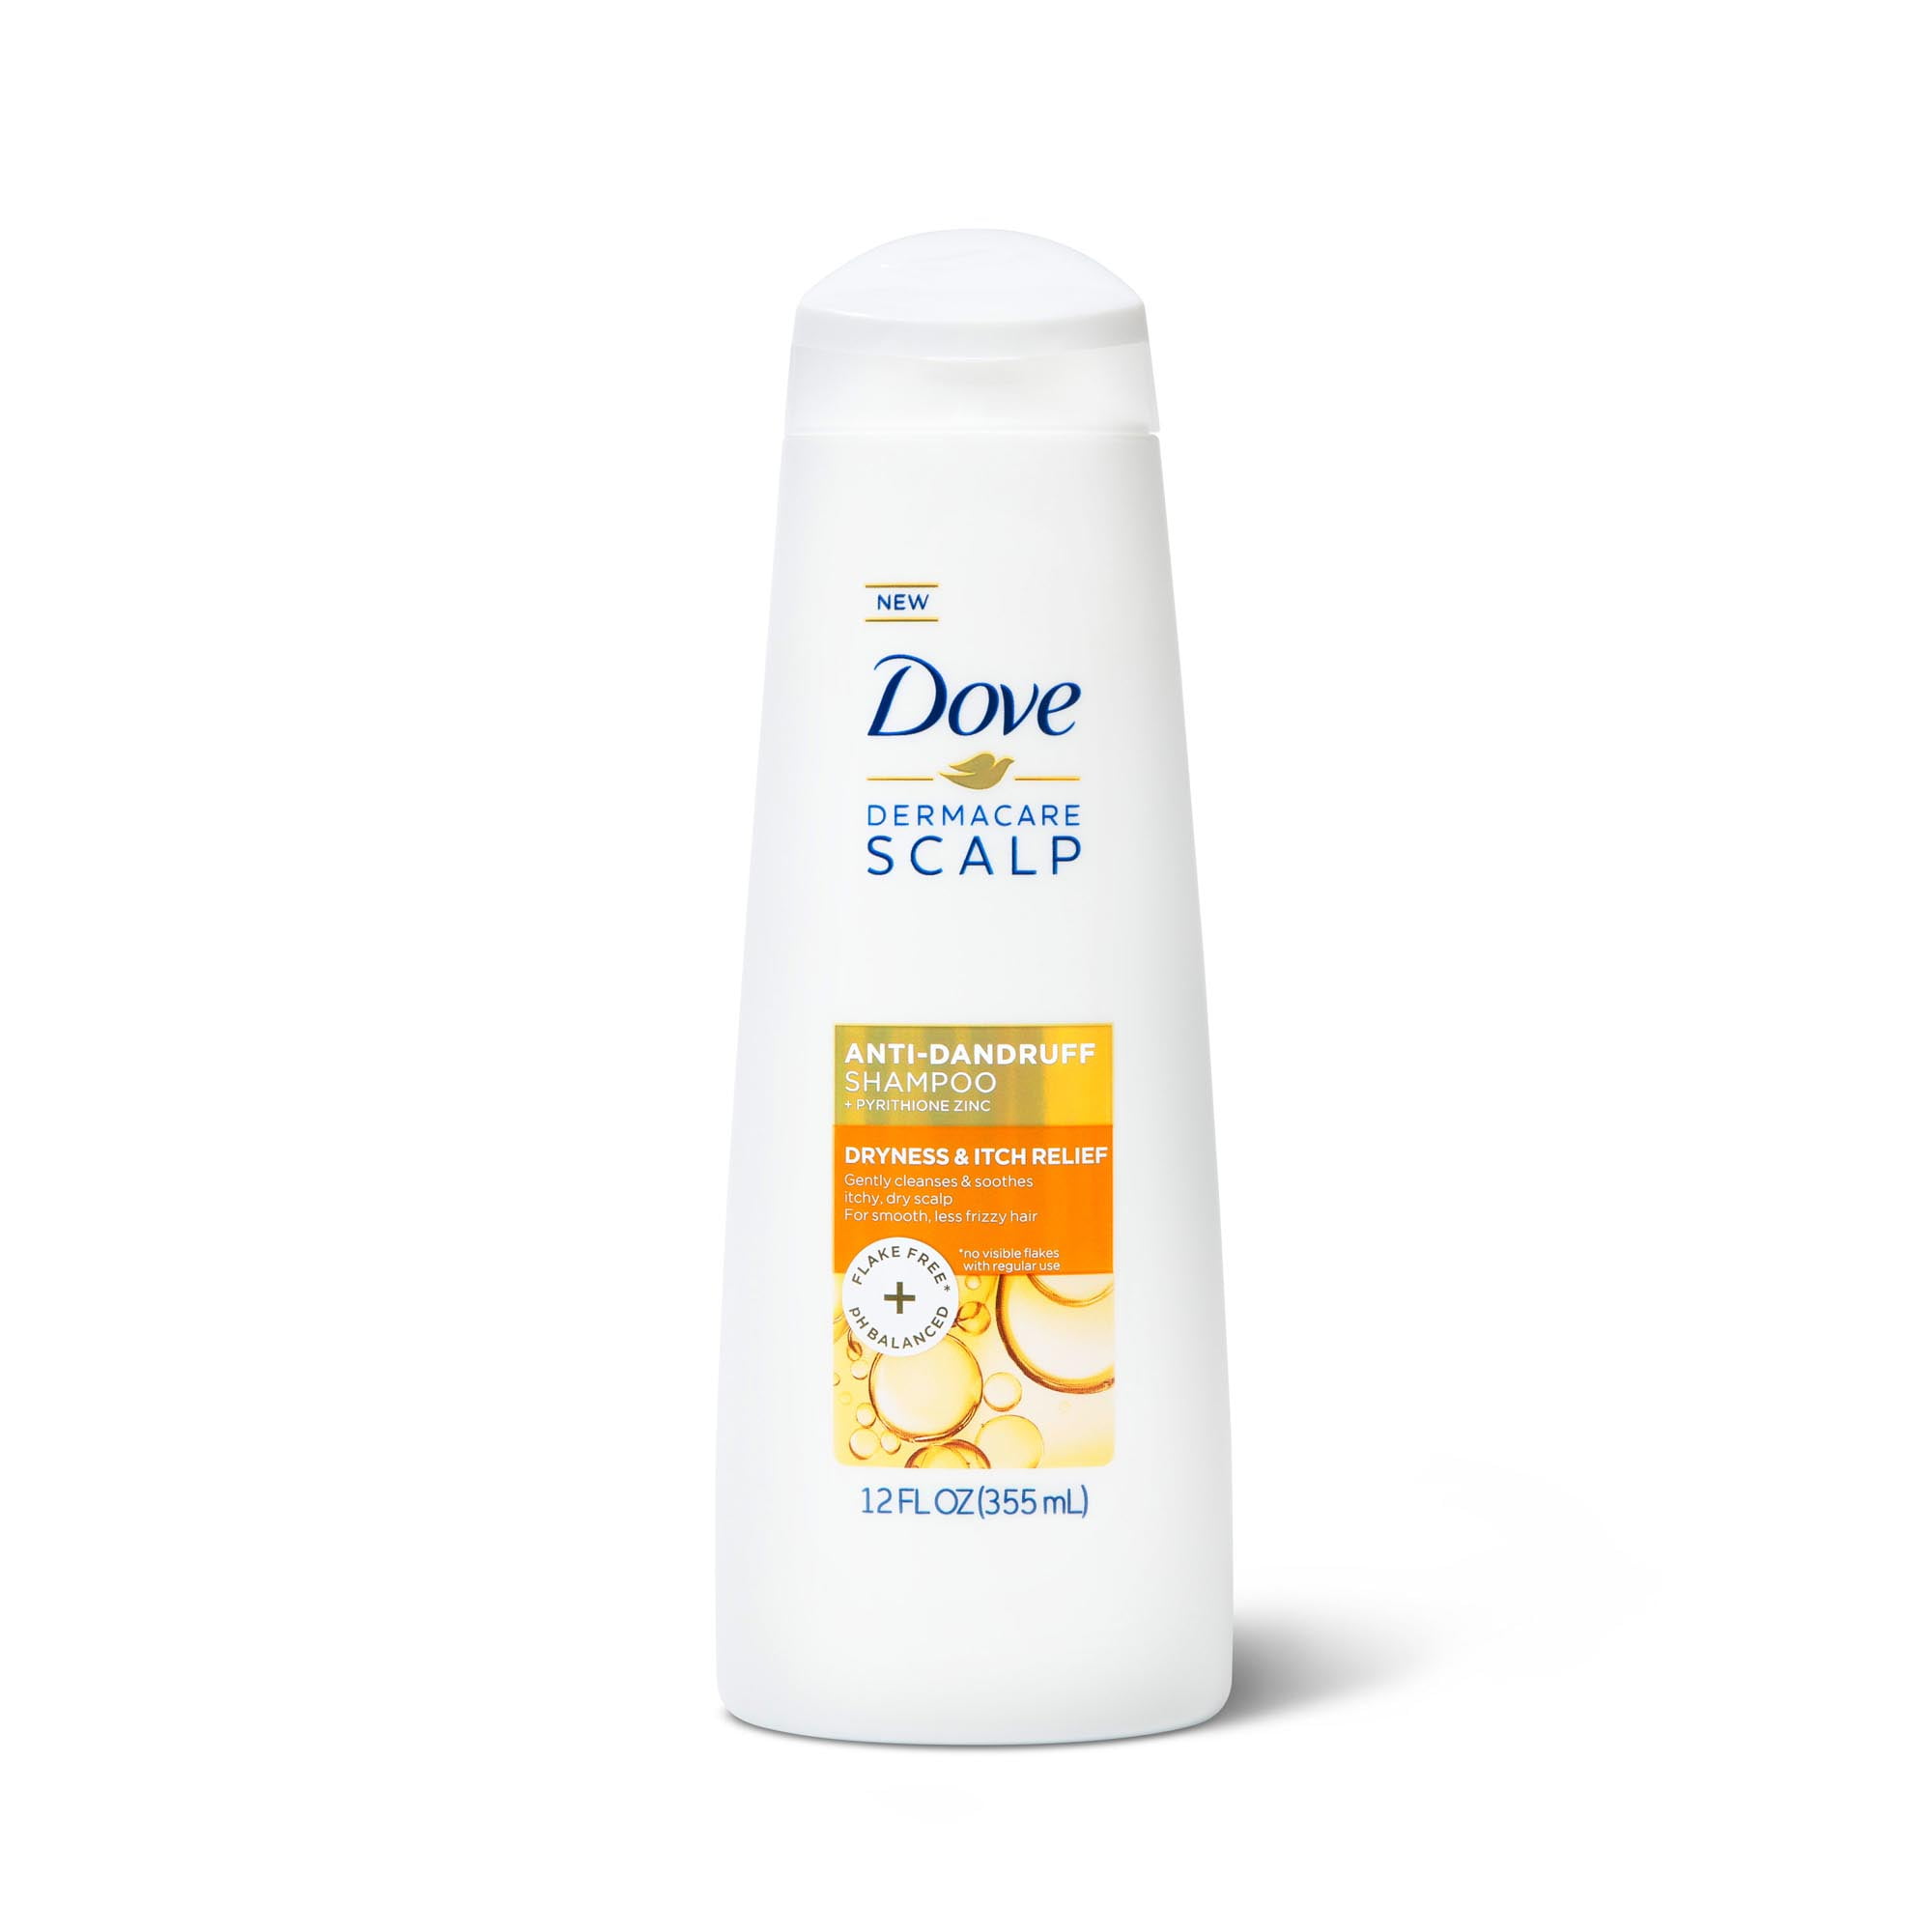 Dove DermaCare Scalp Anti Dandruff Shampoo 12 fl oz 